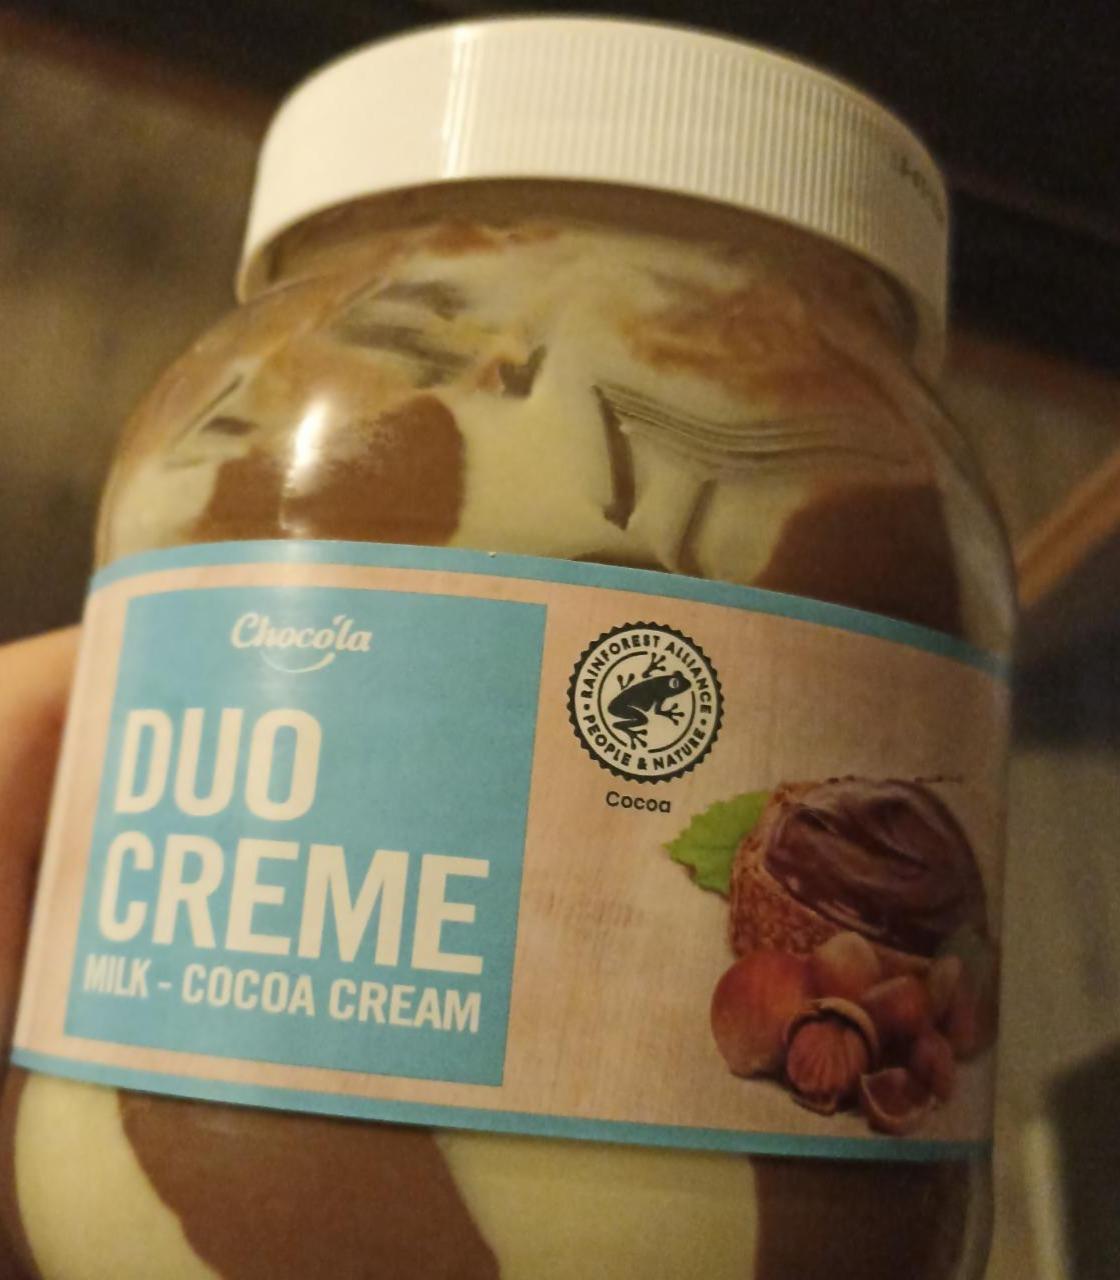 Fotografie - Duo creme Milk - Cocoa Cream Chocóla